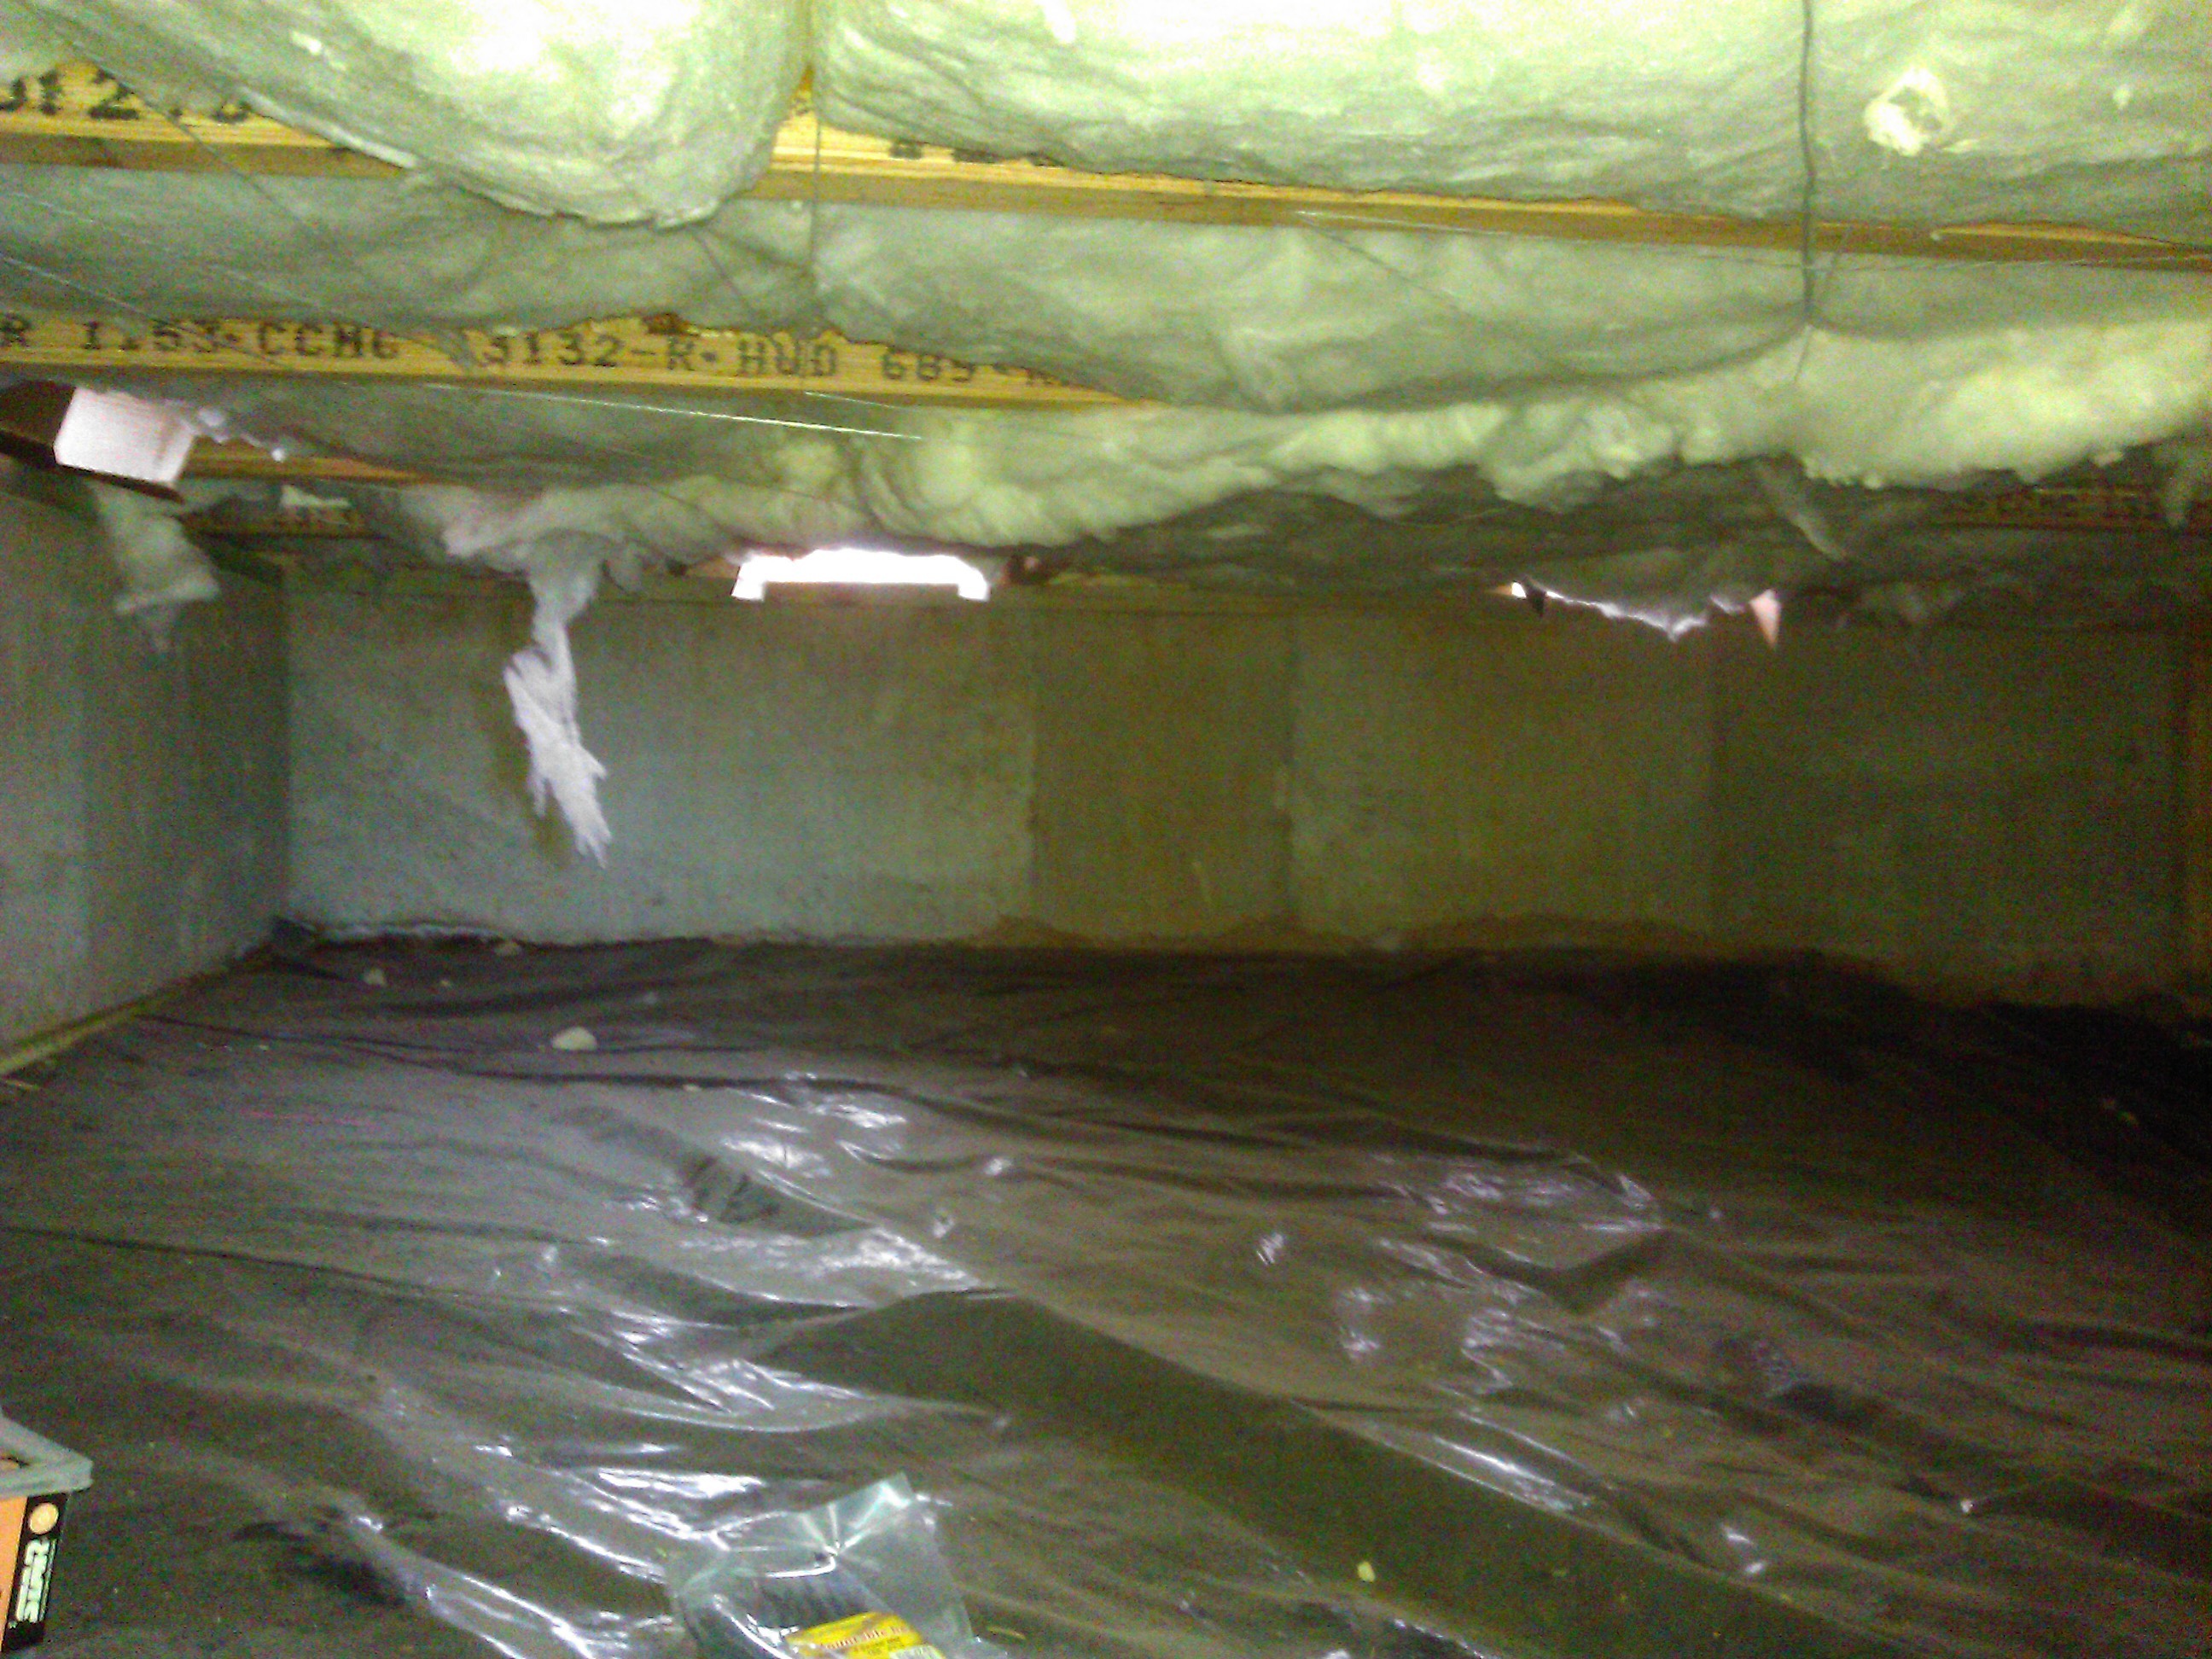 Under the flex room, in the crawlspace, where the conduit will go